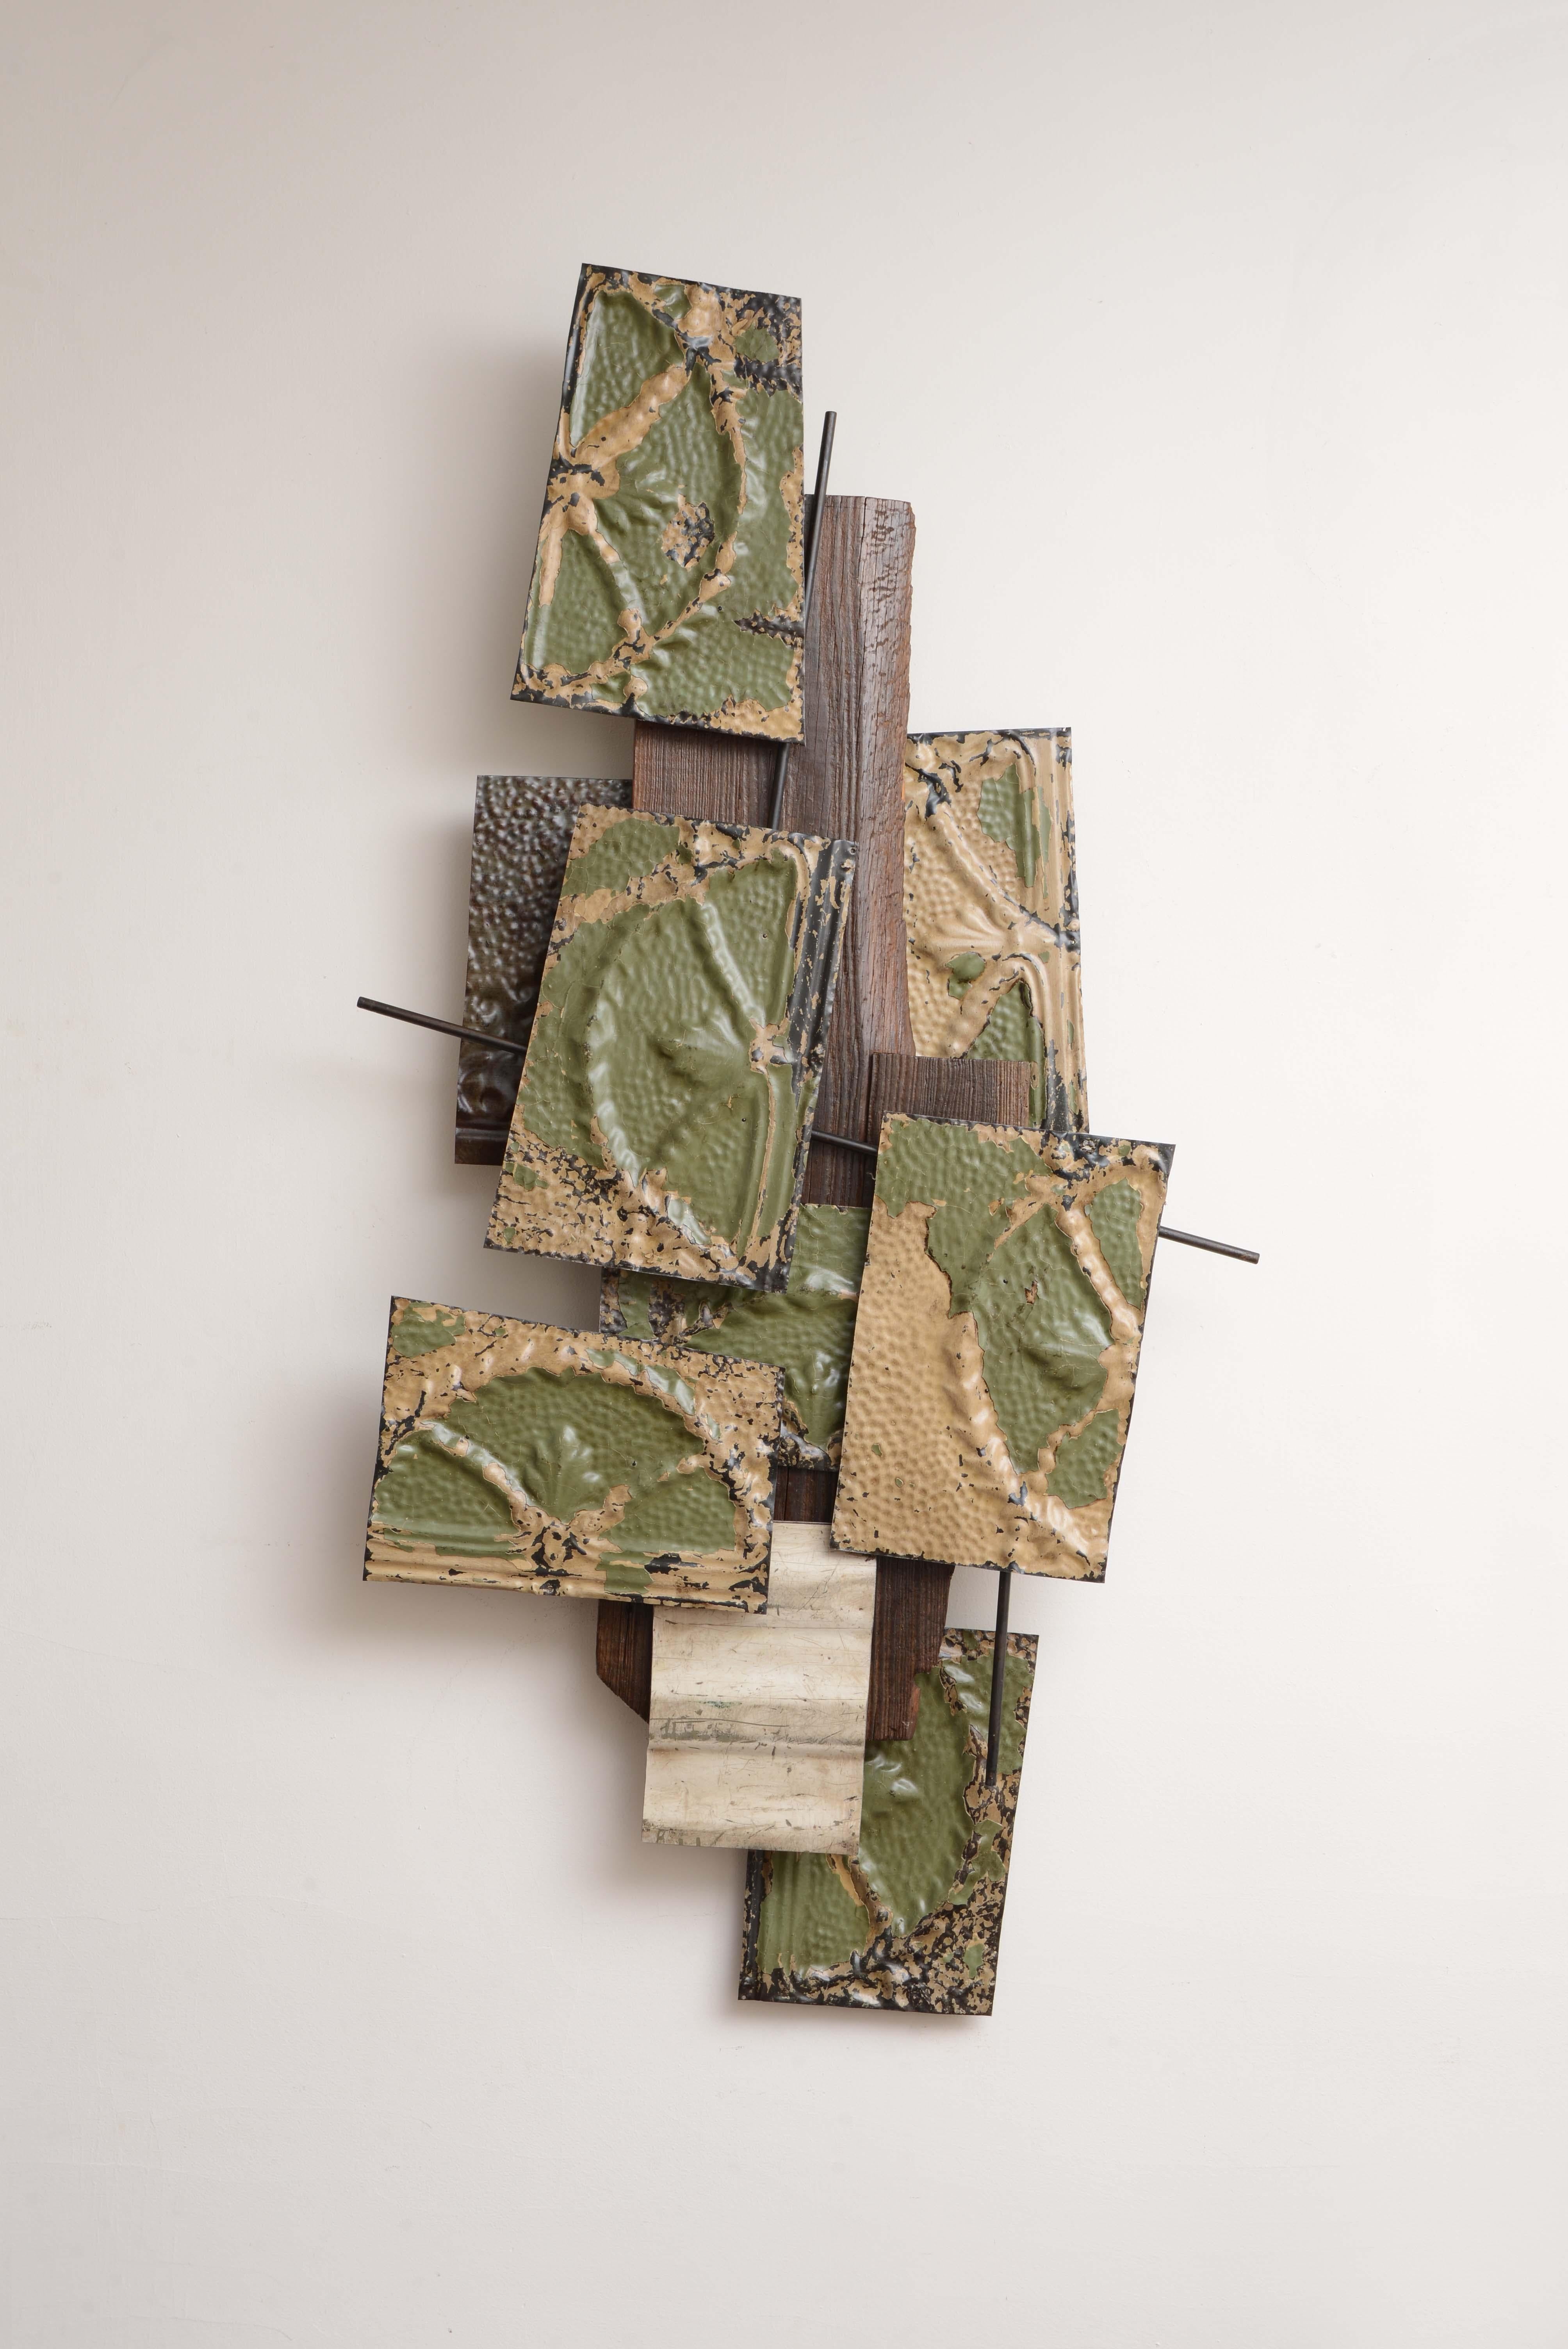 Koji Takei Abstract Sculpture - Tin Tiles with Rods